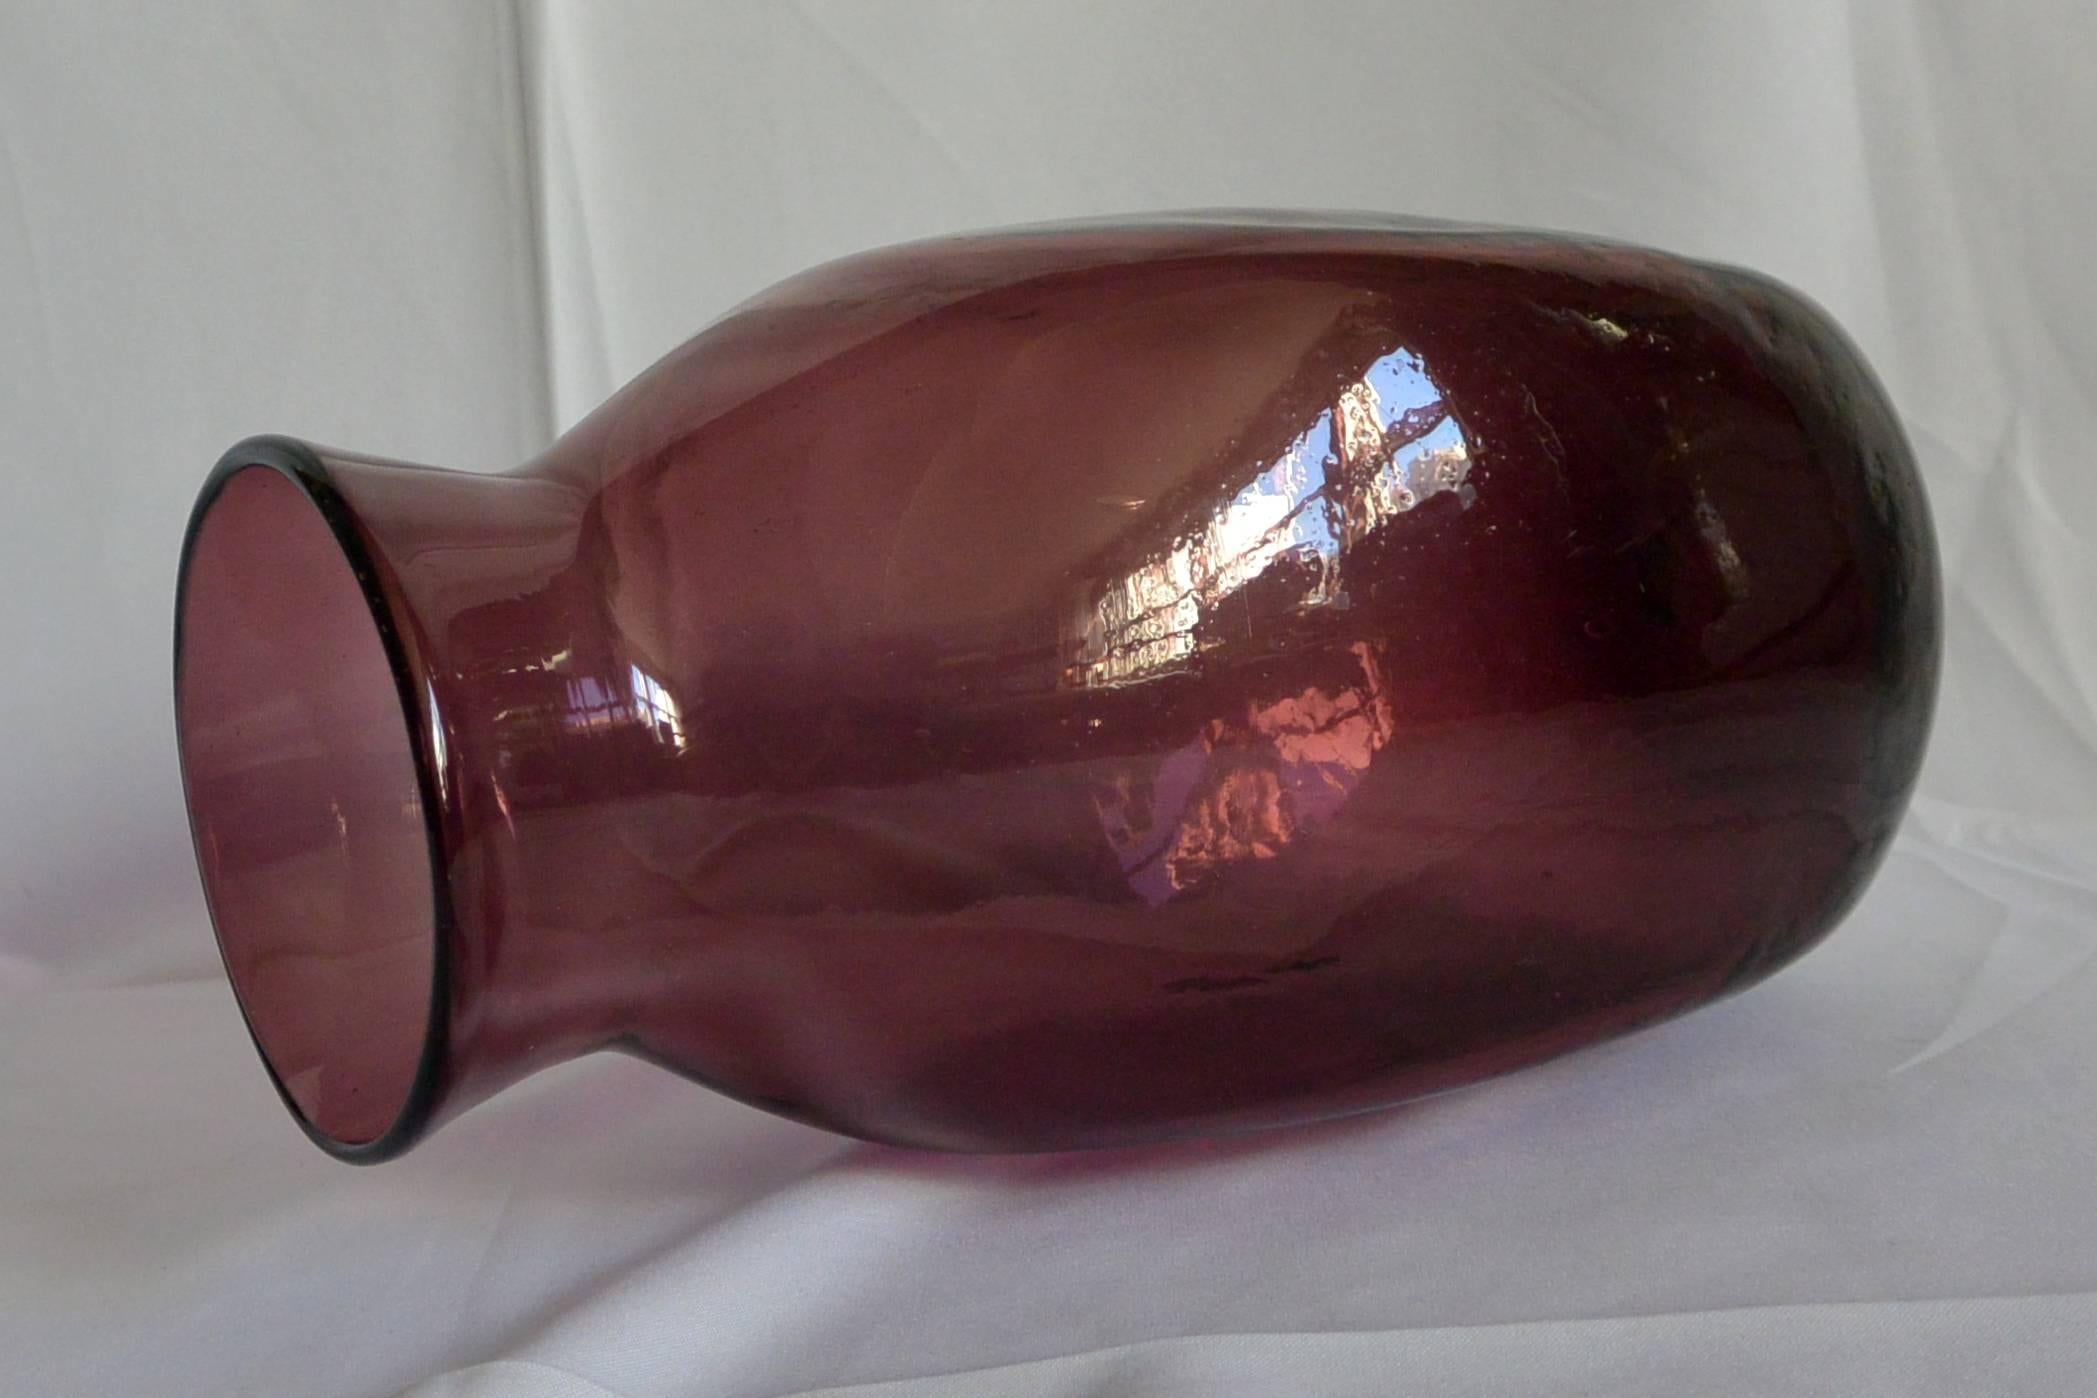 Vintage Italian amethyst glass vase.  Large purple flower vase.   Italy, mid 20th century. 
Dimension: 6" L x 6" D x 13.5" H; 4.75" diameter top
 